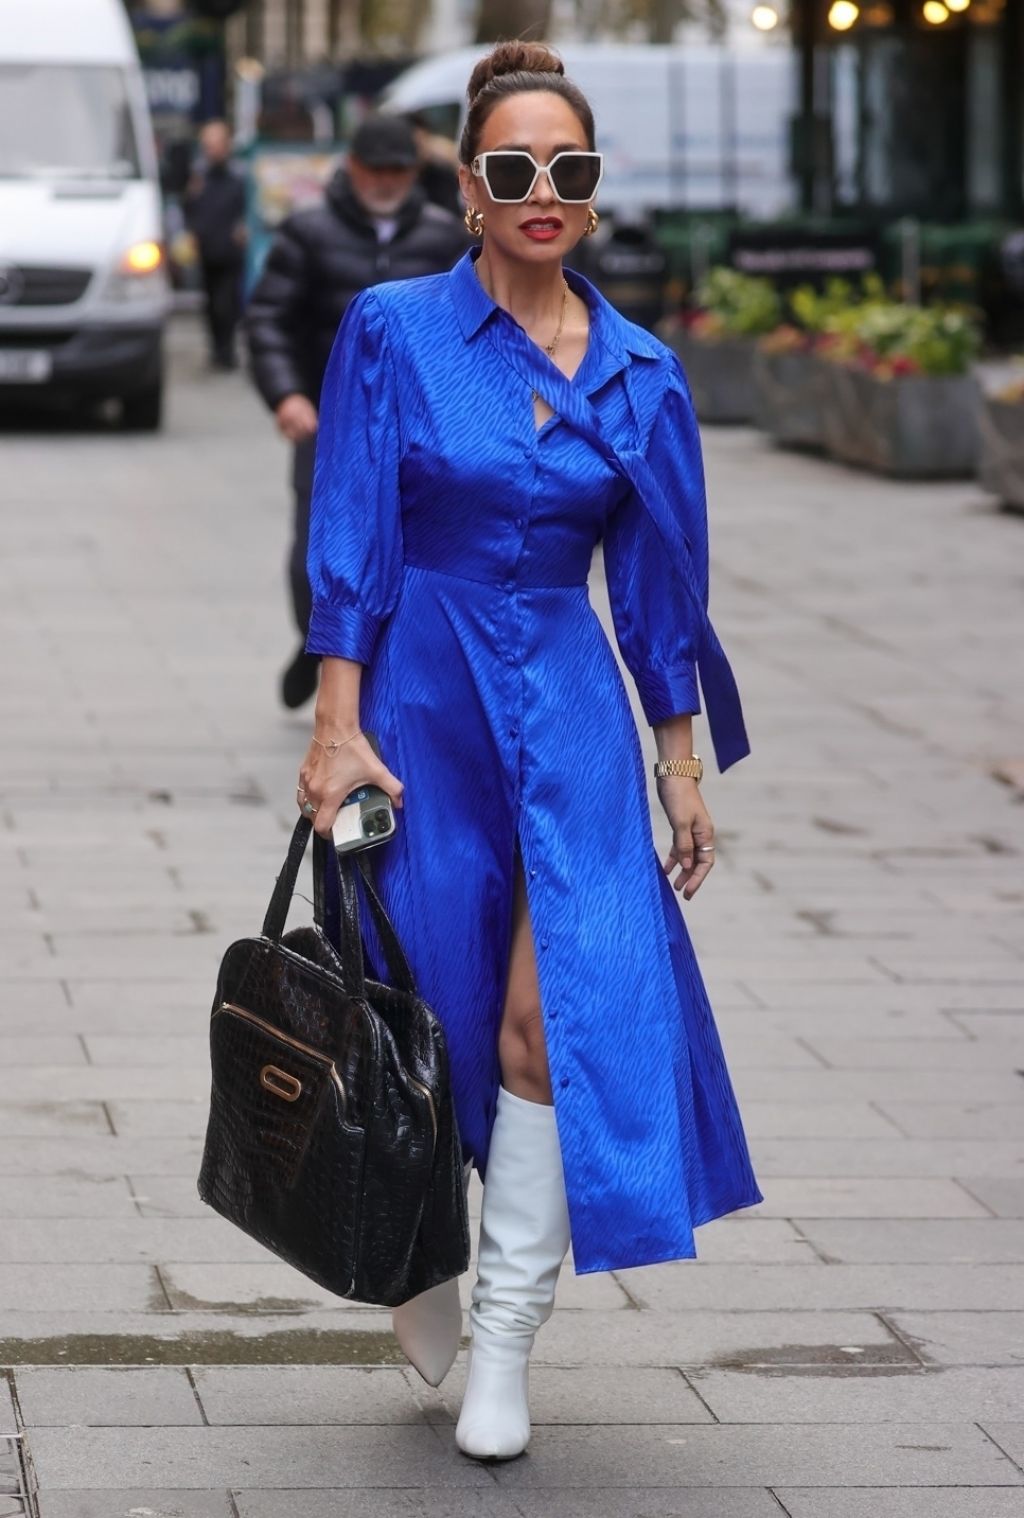 Myleene Klass in Metallic Blue High Split Dress - London 11/08/2022 ...